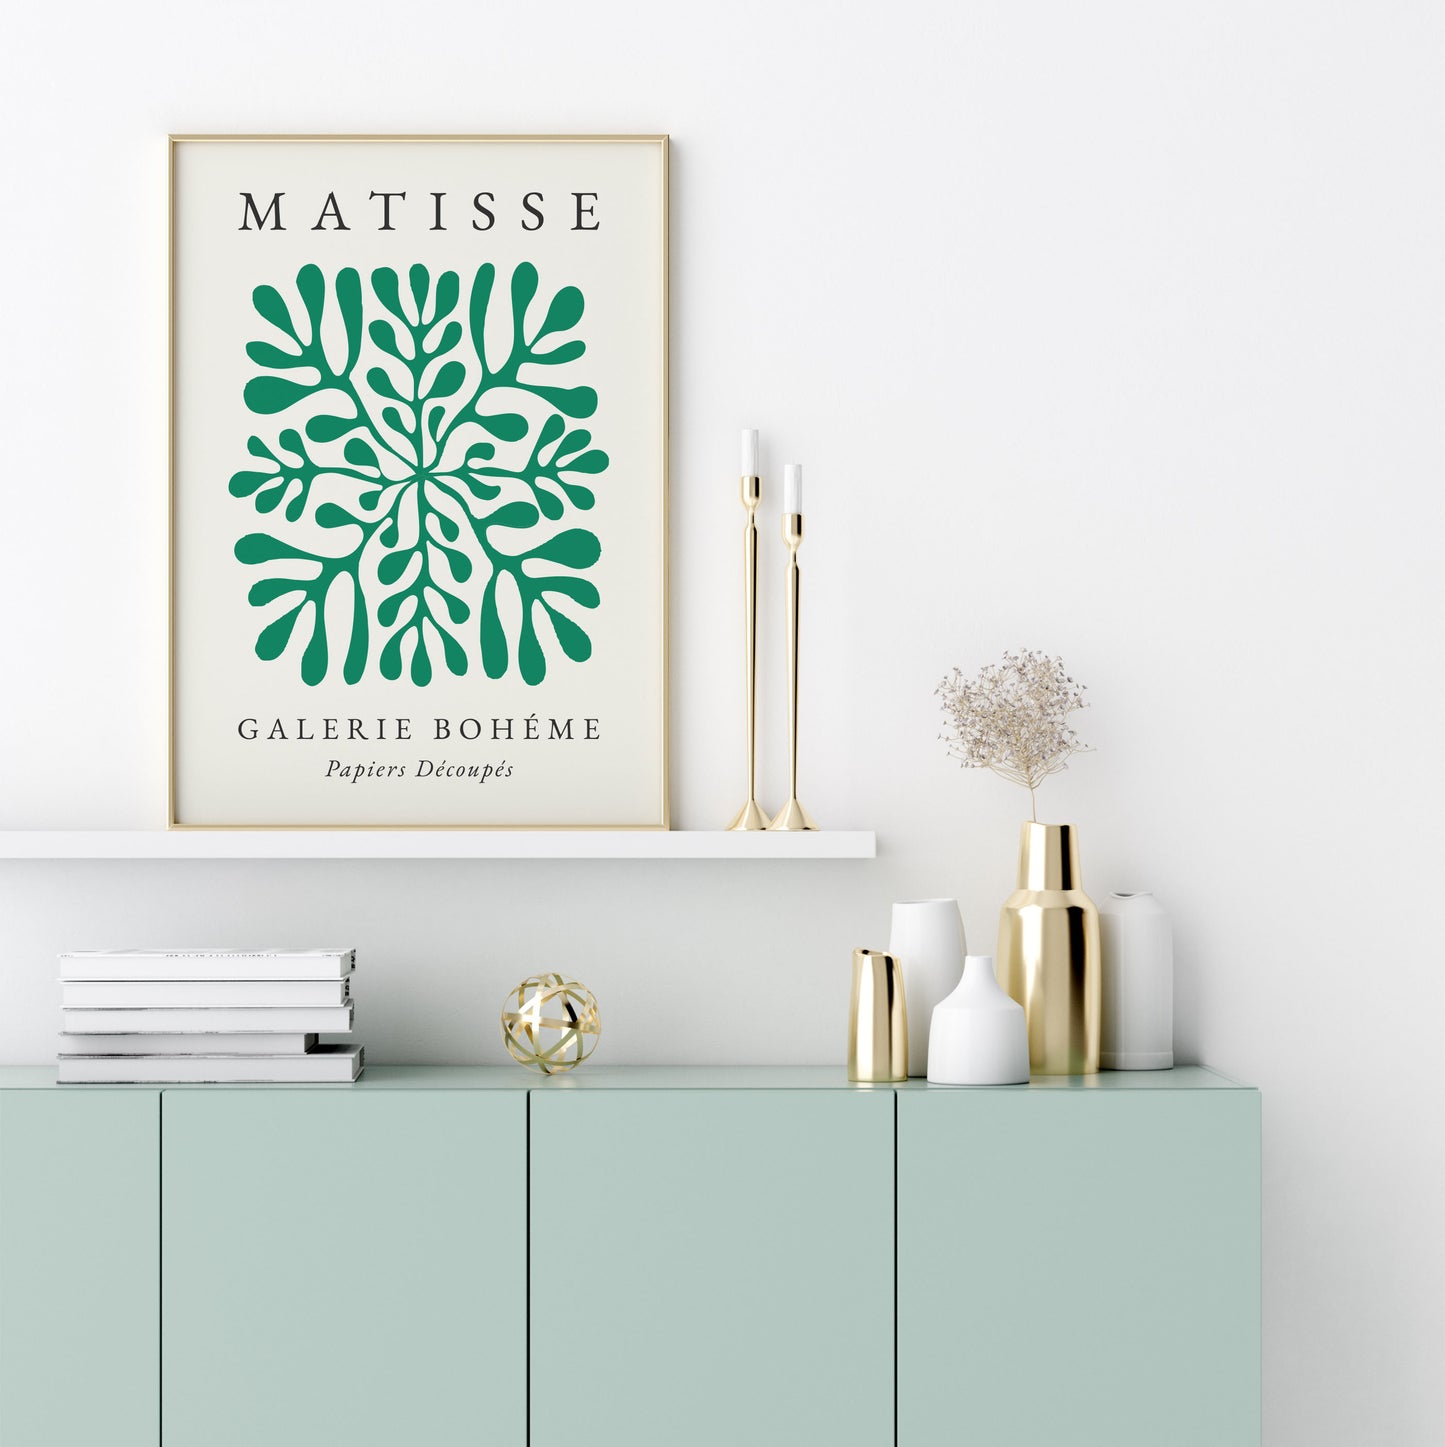 Matisse poster in green with minimalist leaf design